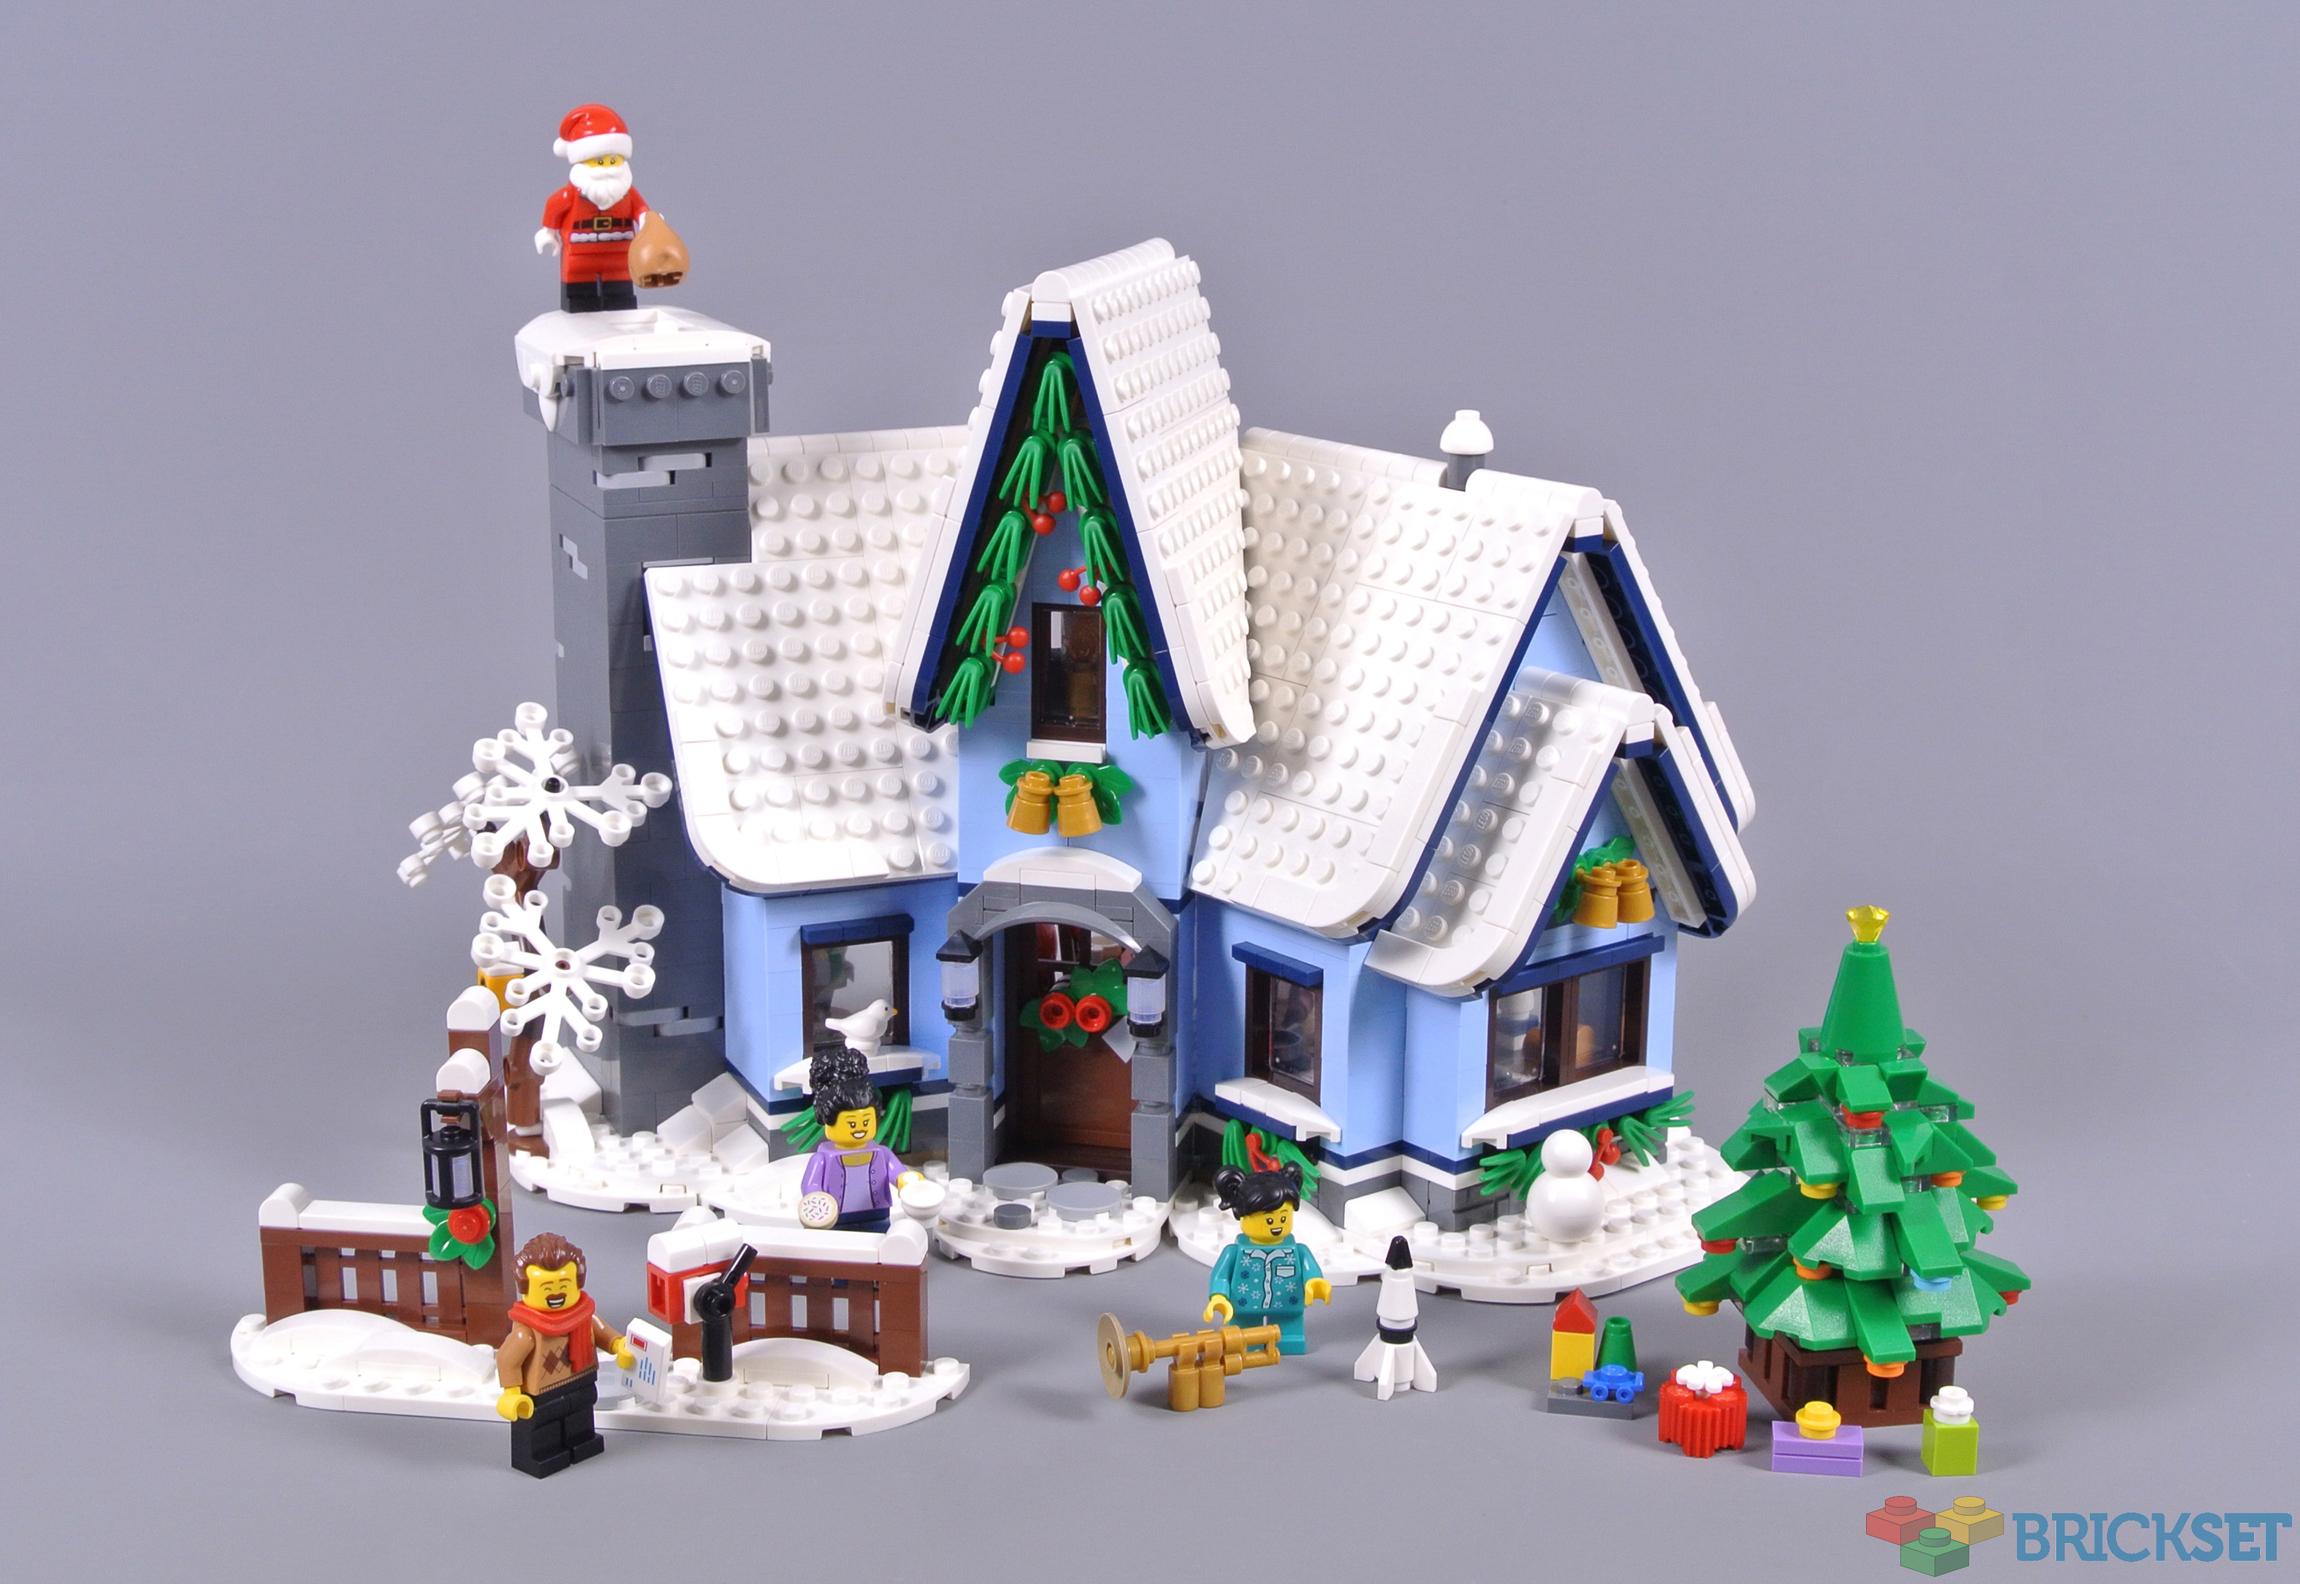 LEGO 10293 Santa's Visit review | Brickset